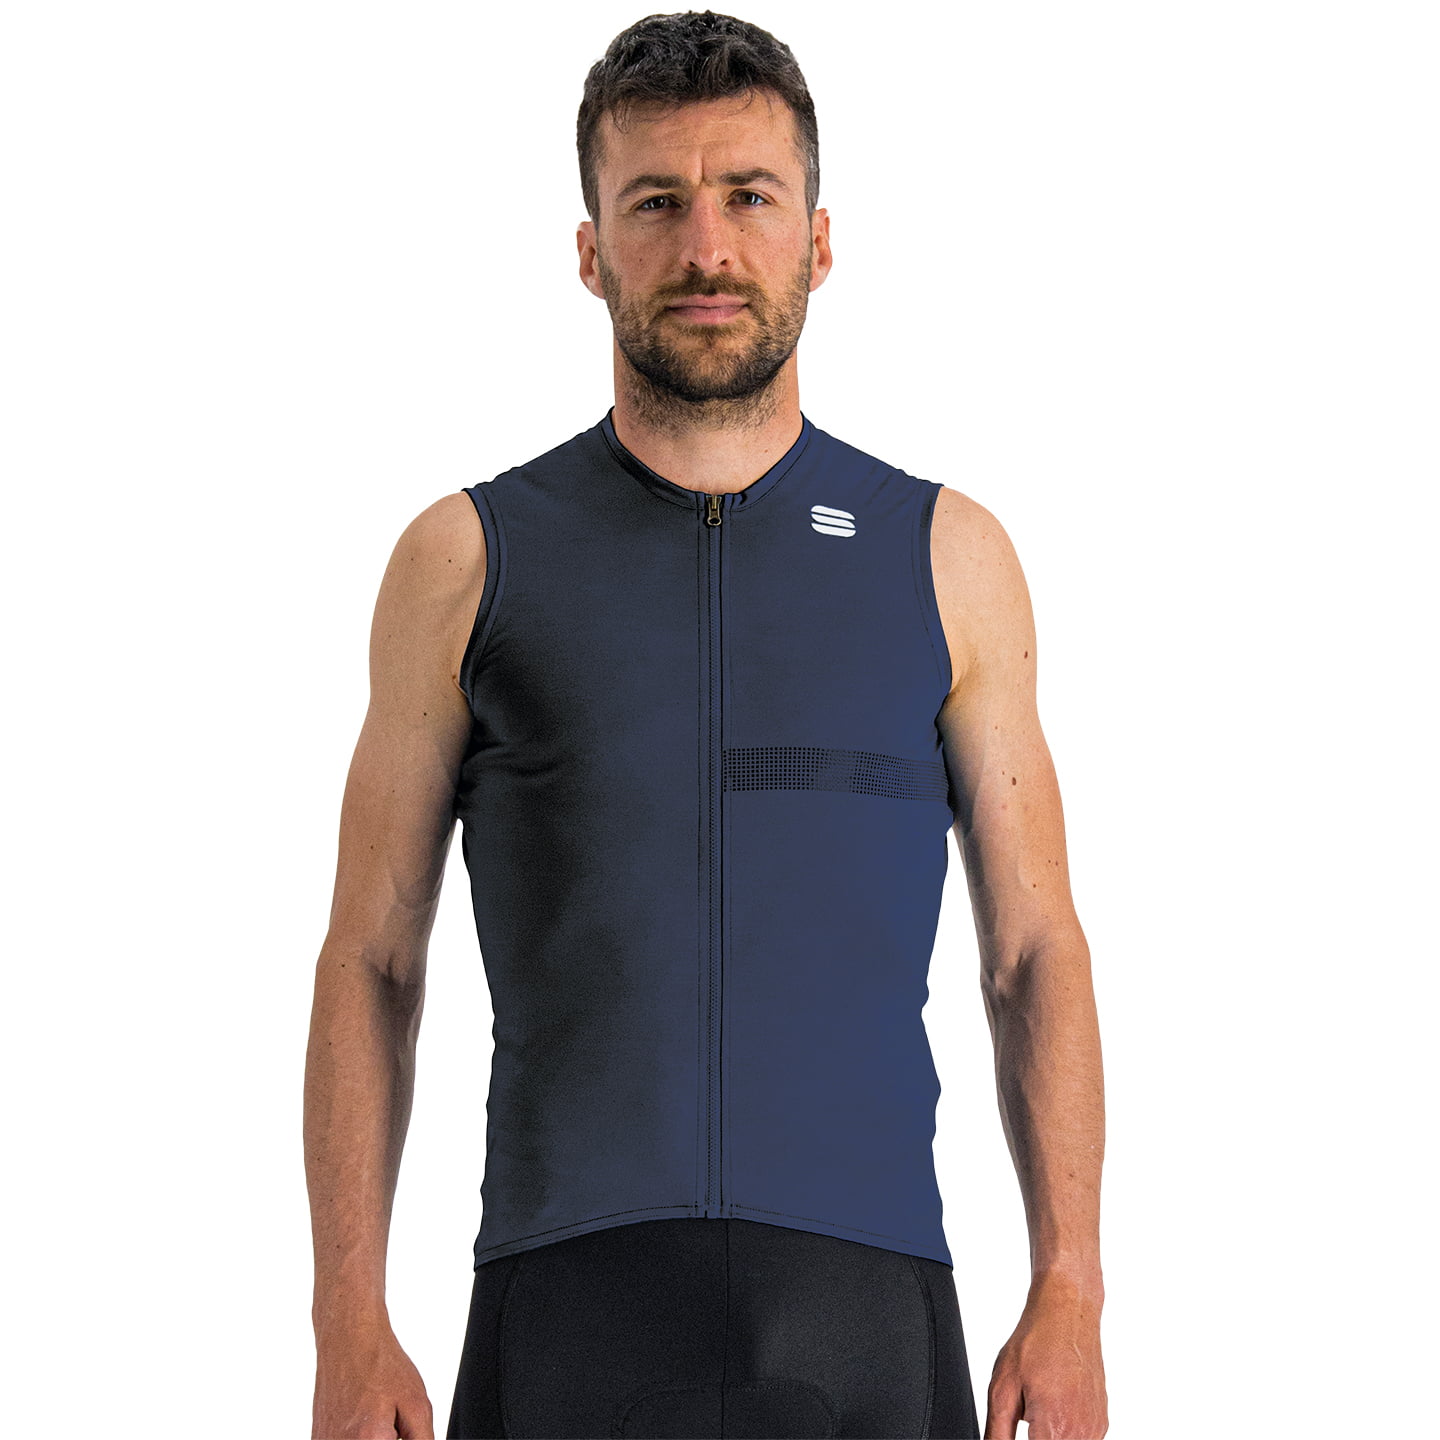 SPORTFUL Matchy Sleeveless Jersey Sleeveless Jersey, for men, size M, Cycling jersey, Cycling clothing